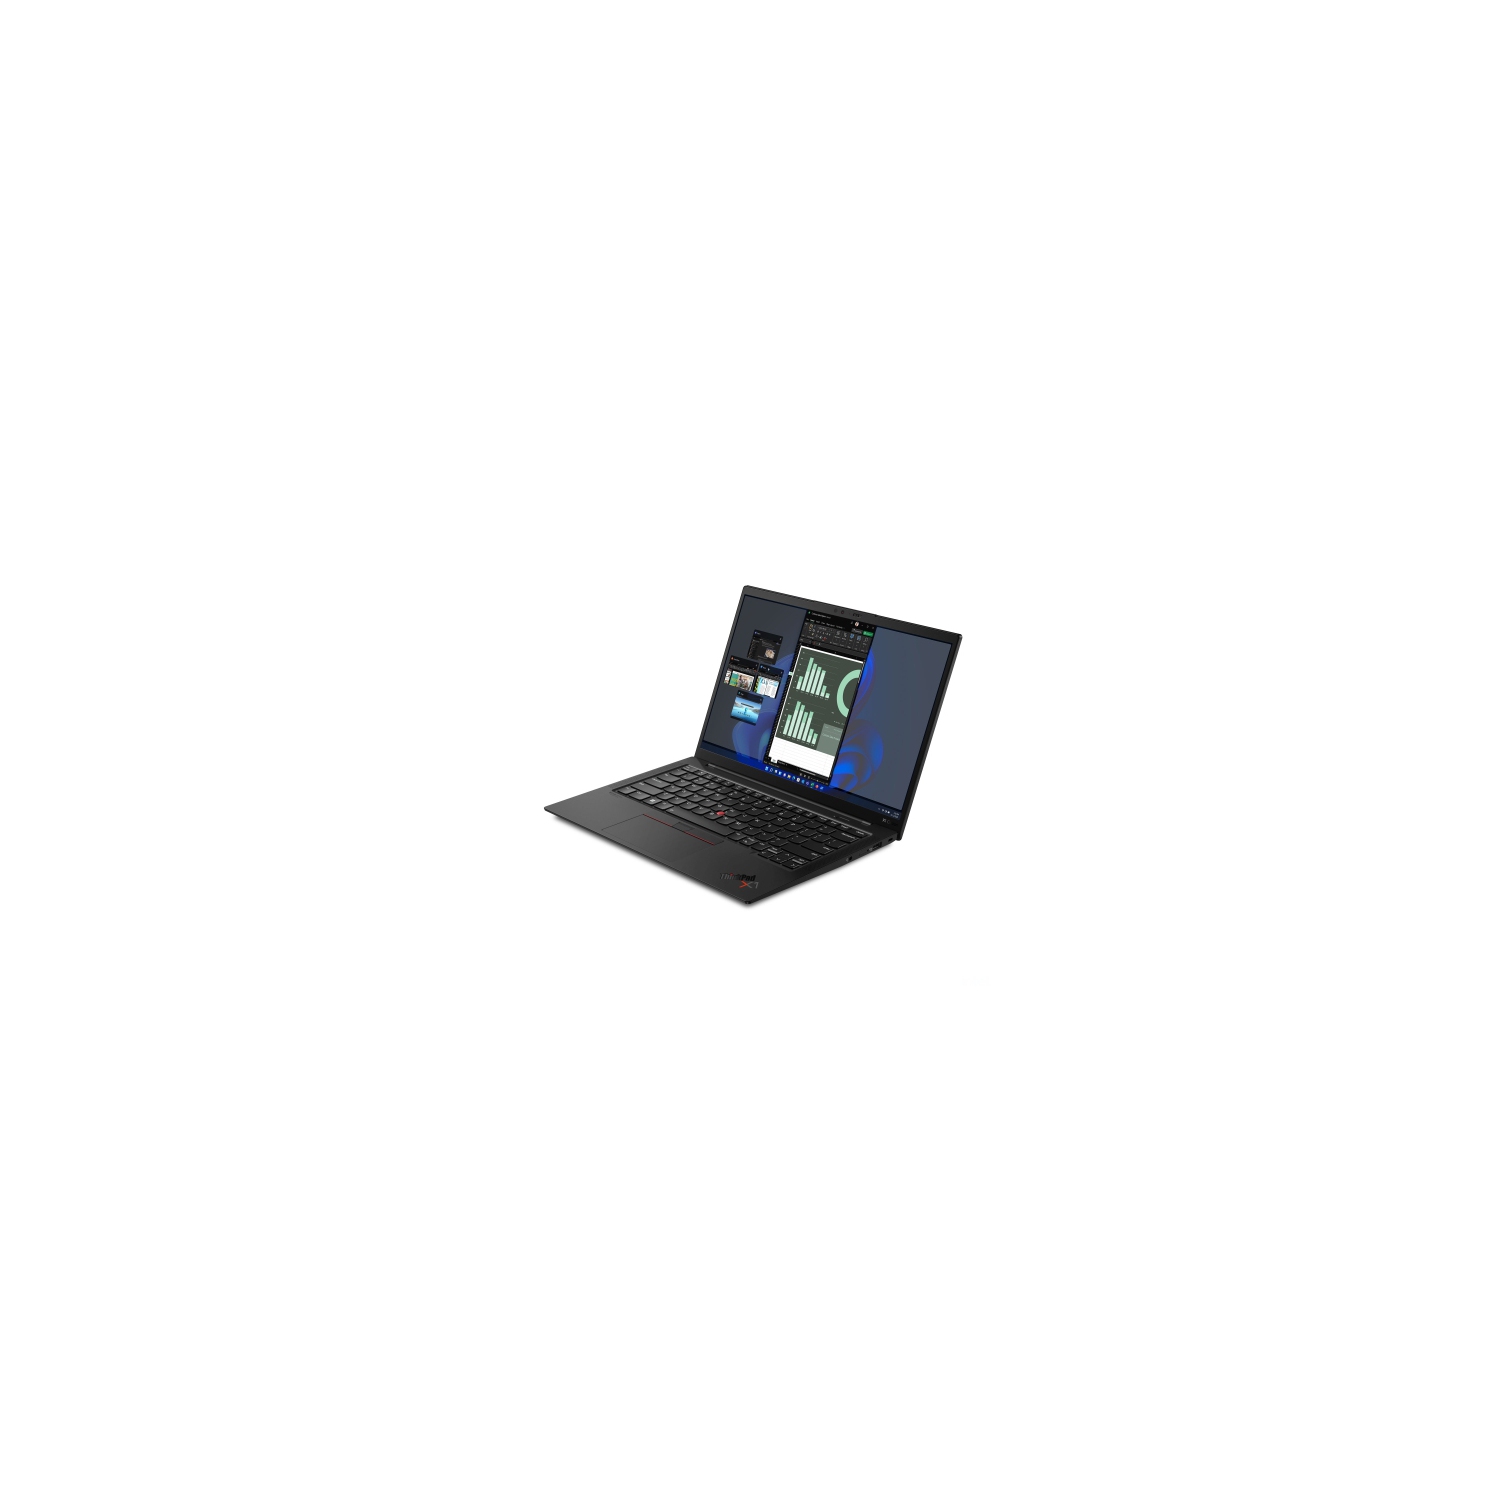 Refurbished (Excellent) - Lenovo ThinkPad X1 Carbon Gen 7 Ultrabook: Intel Core i7-8565U 1.80 GHz, 16GB RAM, 512 GB PCIe SSD, 14 Inch 1920 x 1080, Webcam, Windows 10 Pro